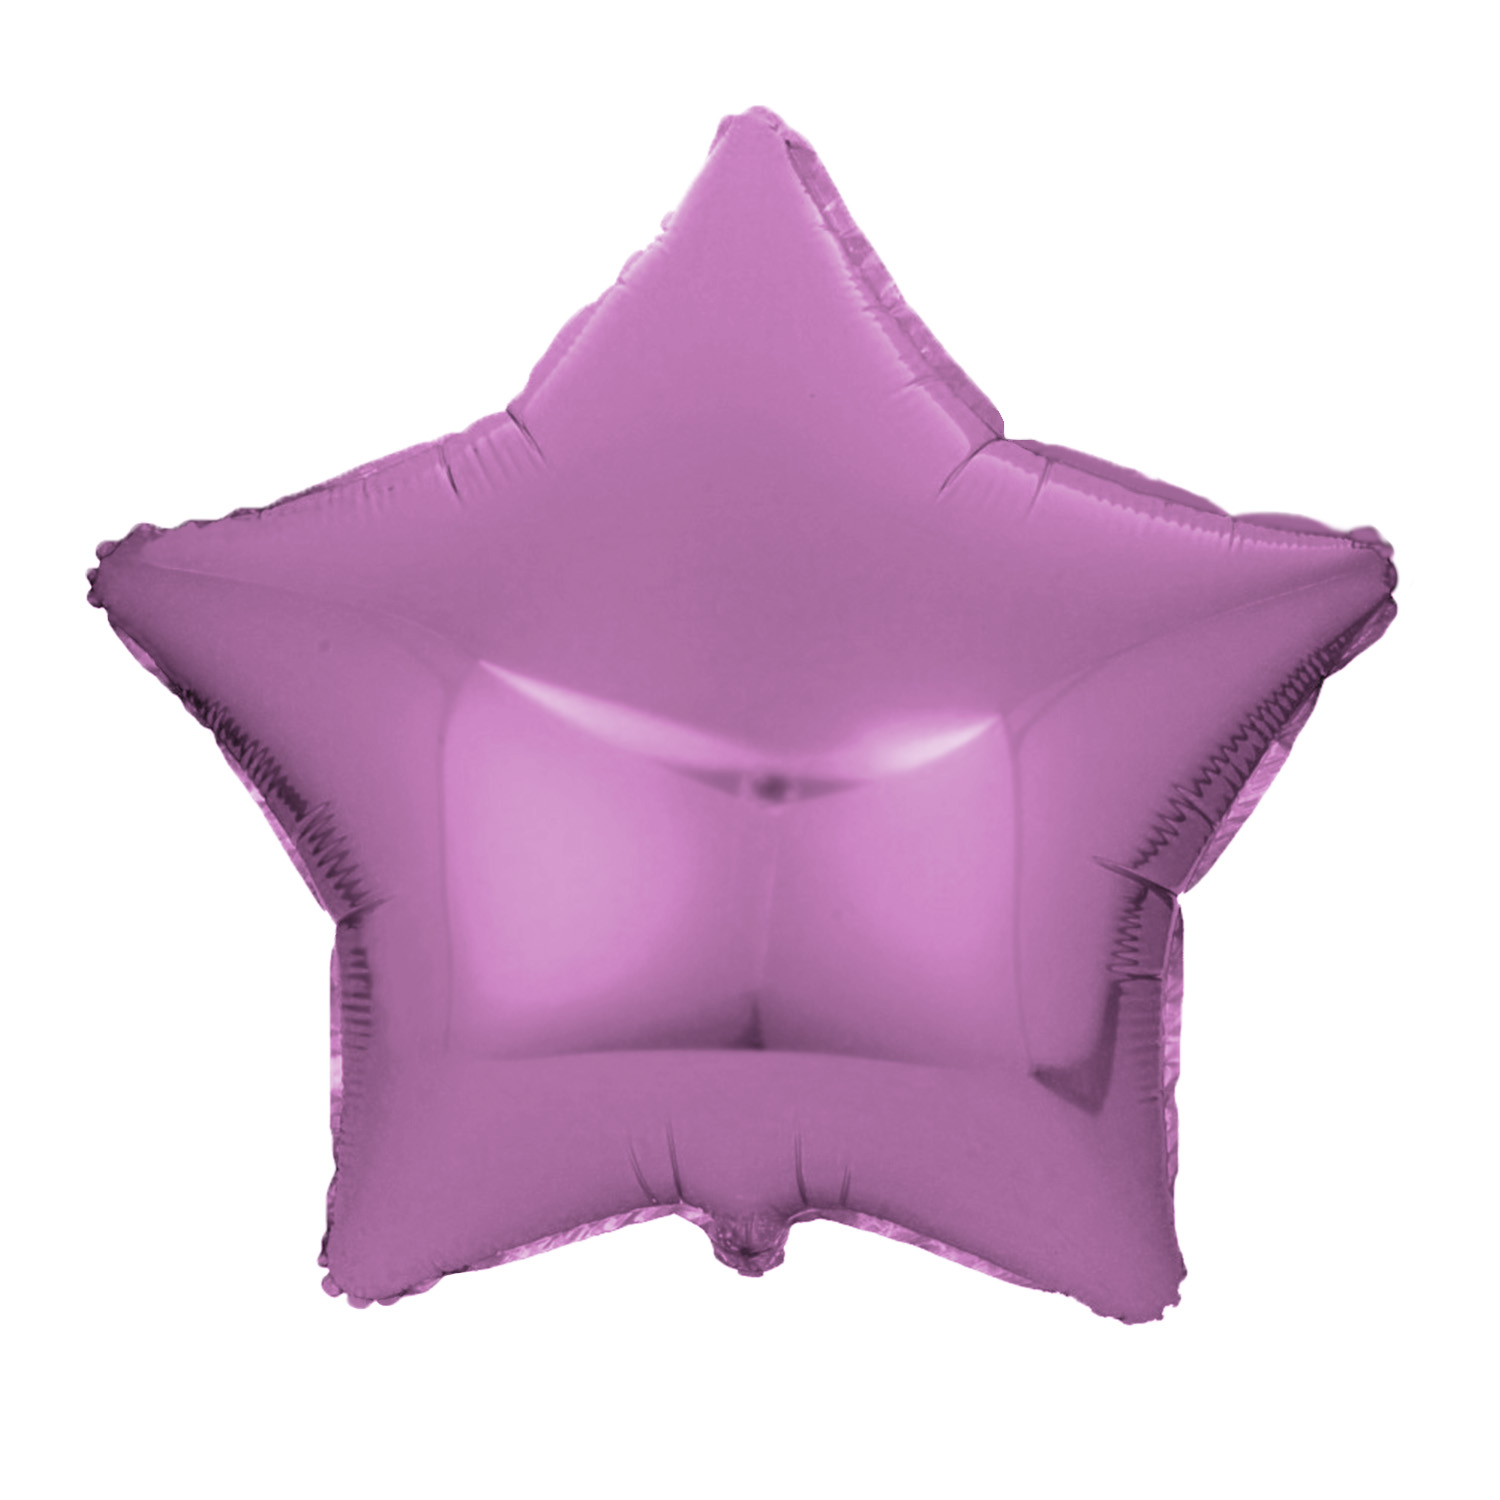 Folienballon Stern, dunkles pink, ca. 45 cm